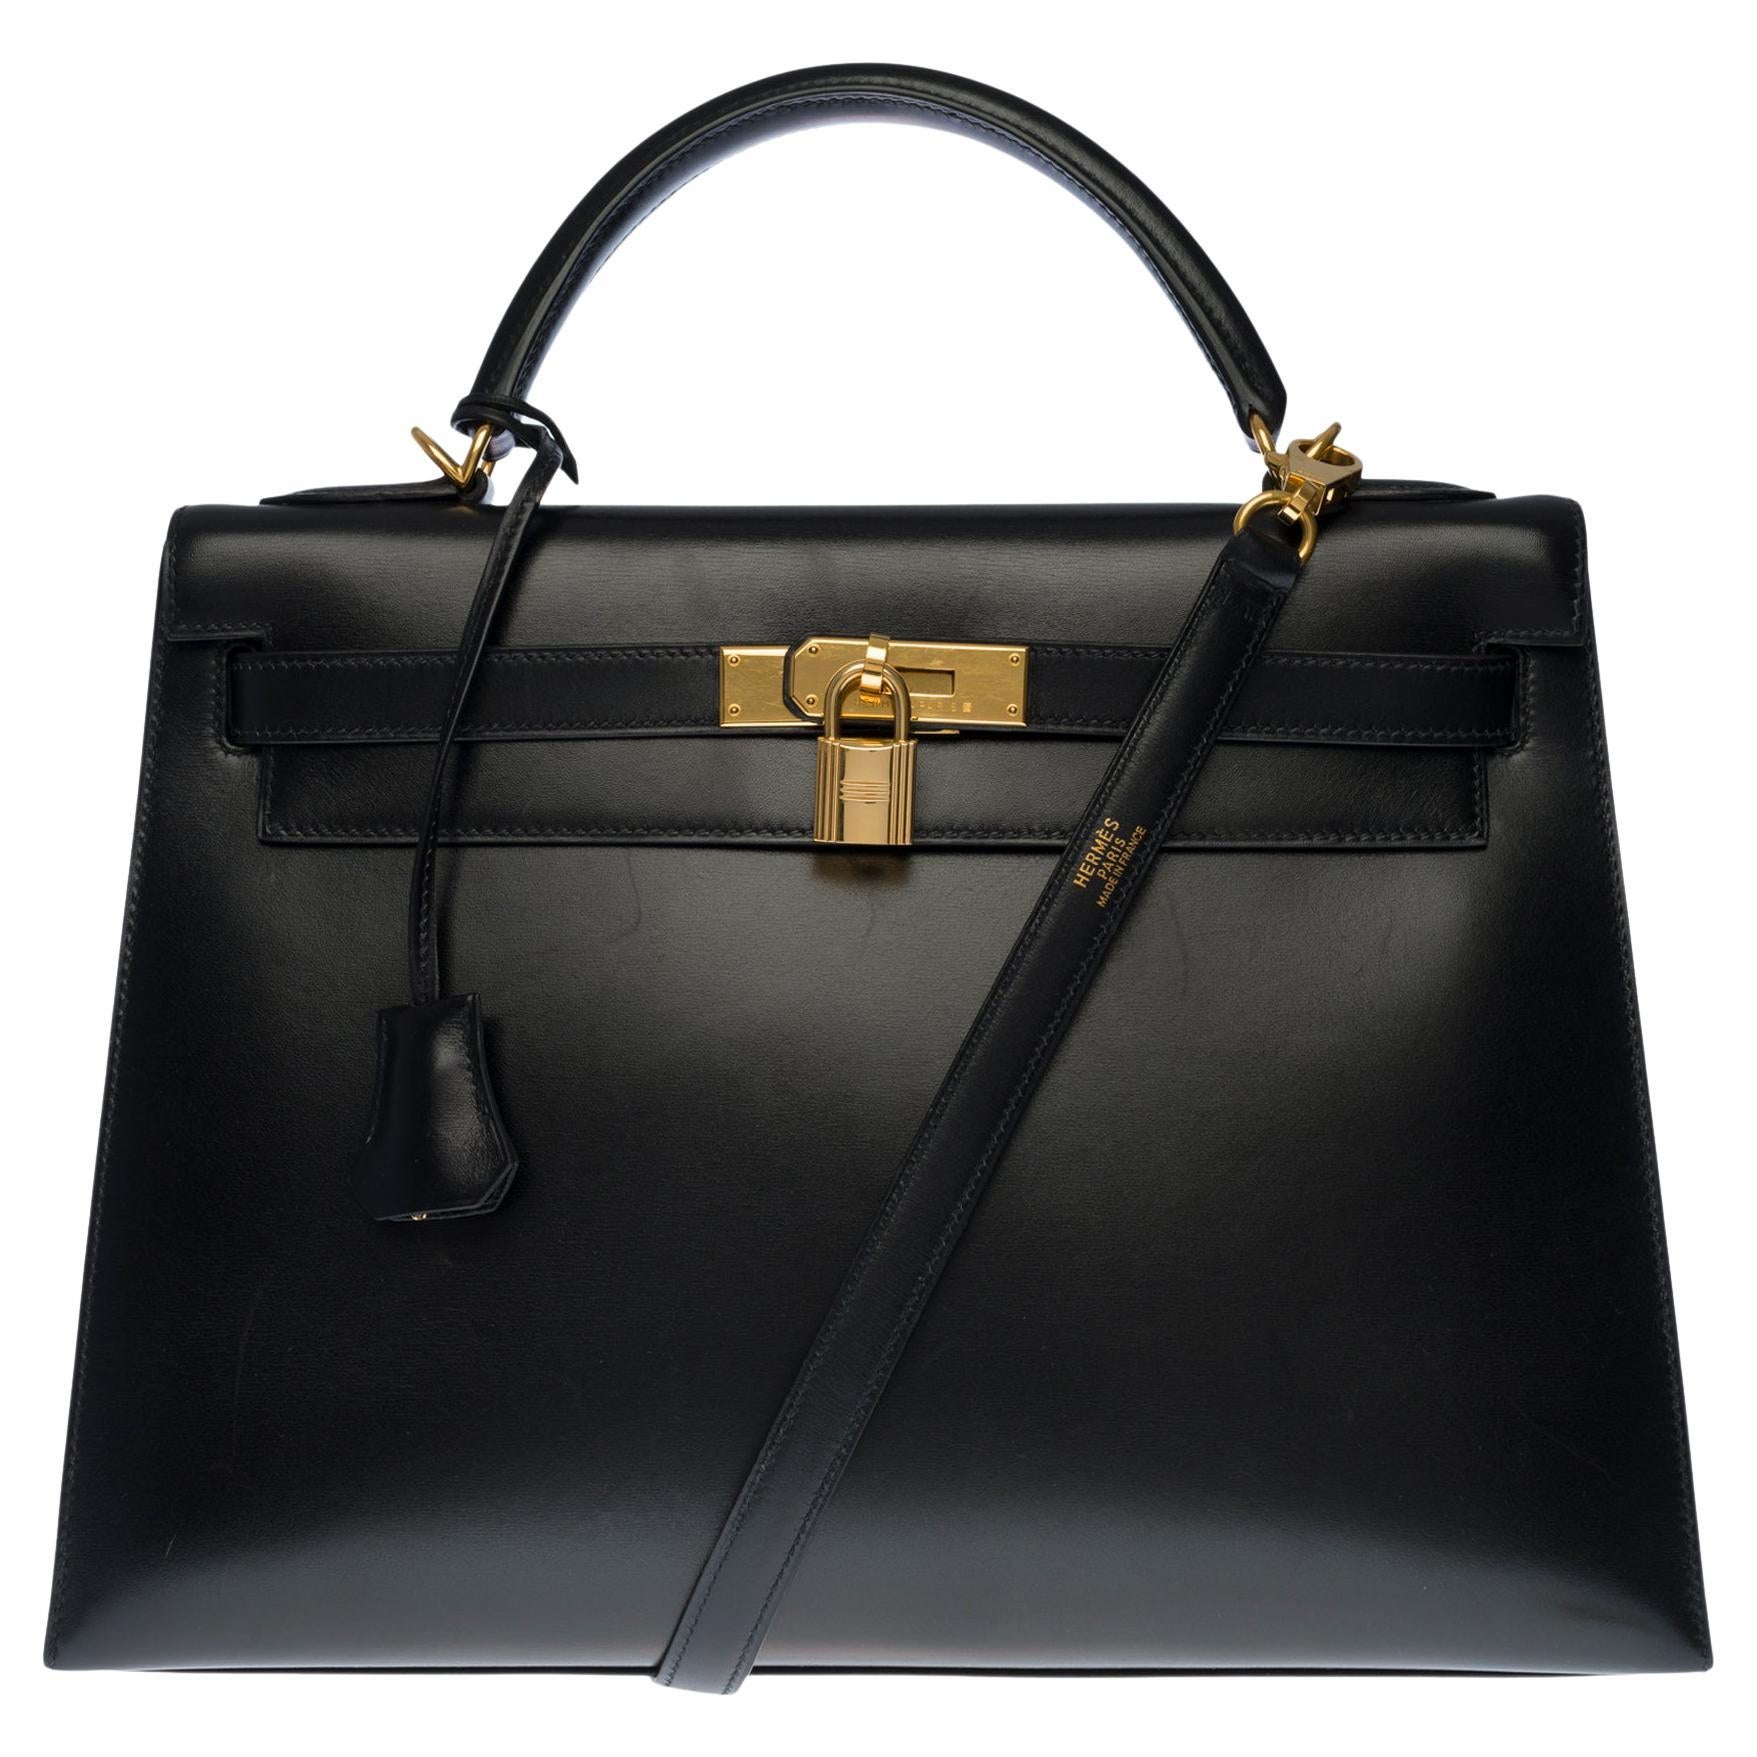 Hermès Kelly 32 handbag with strap in black box calfskin leather, GHW